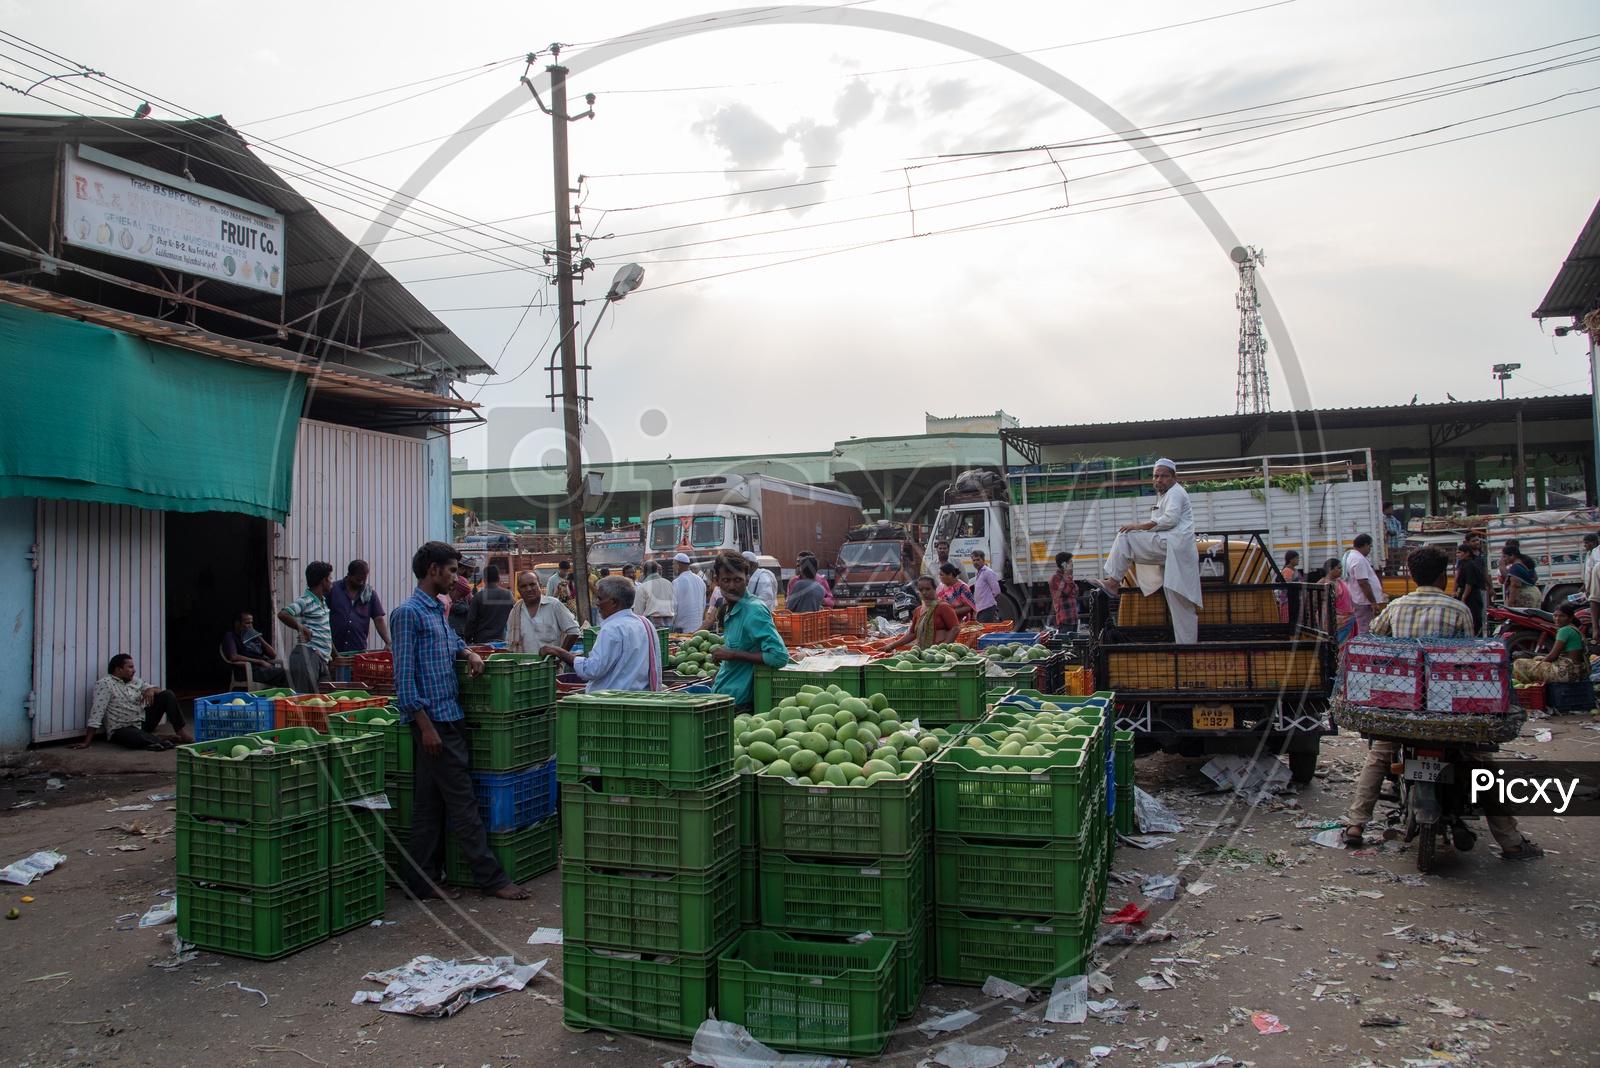 Kothapet Fruit Market